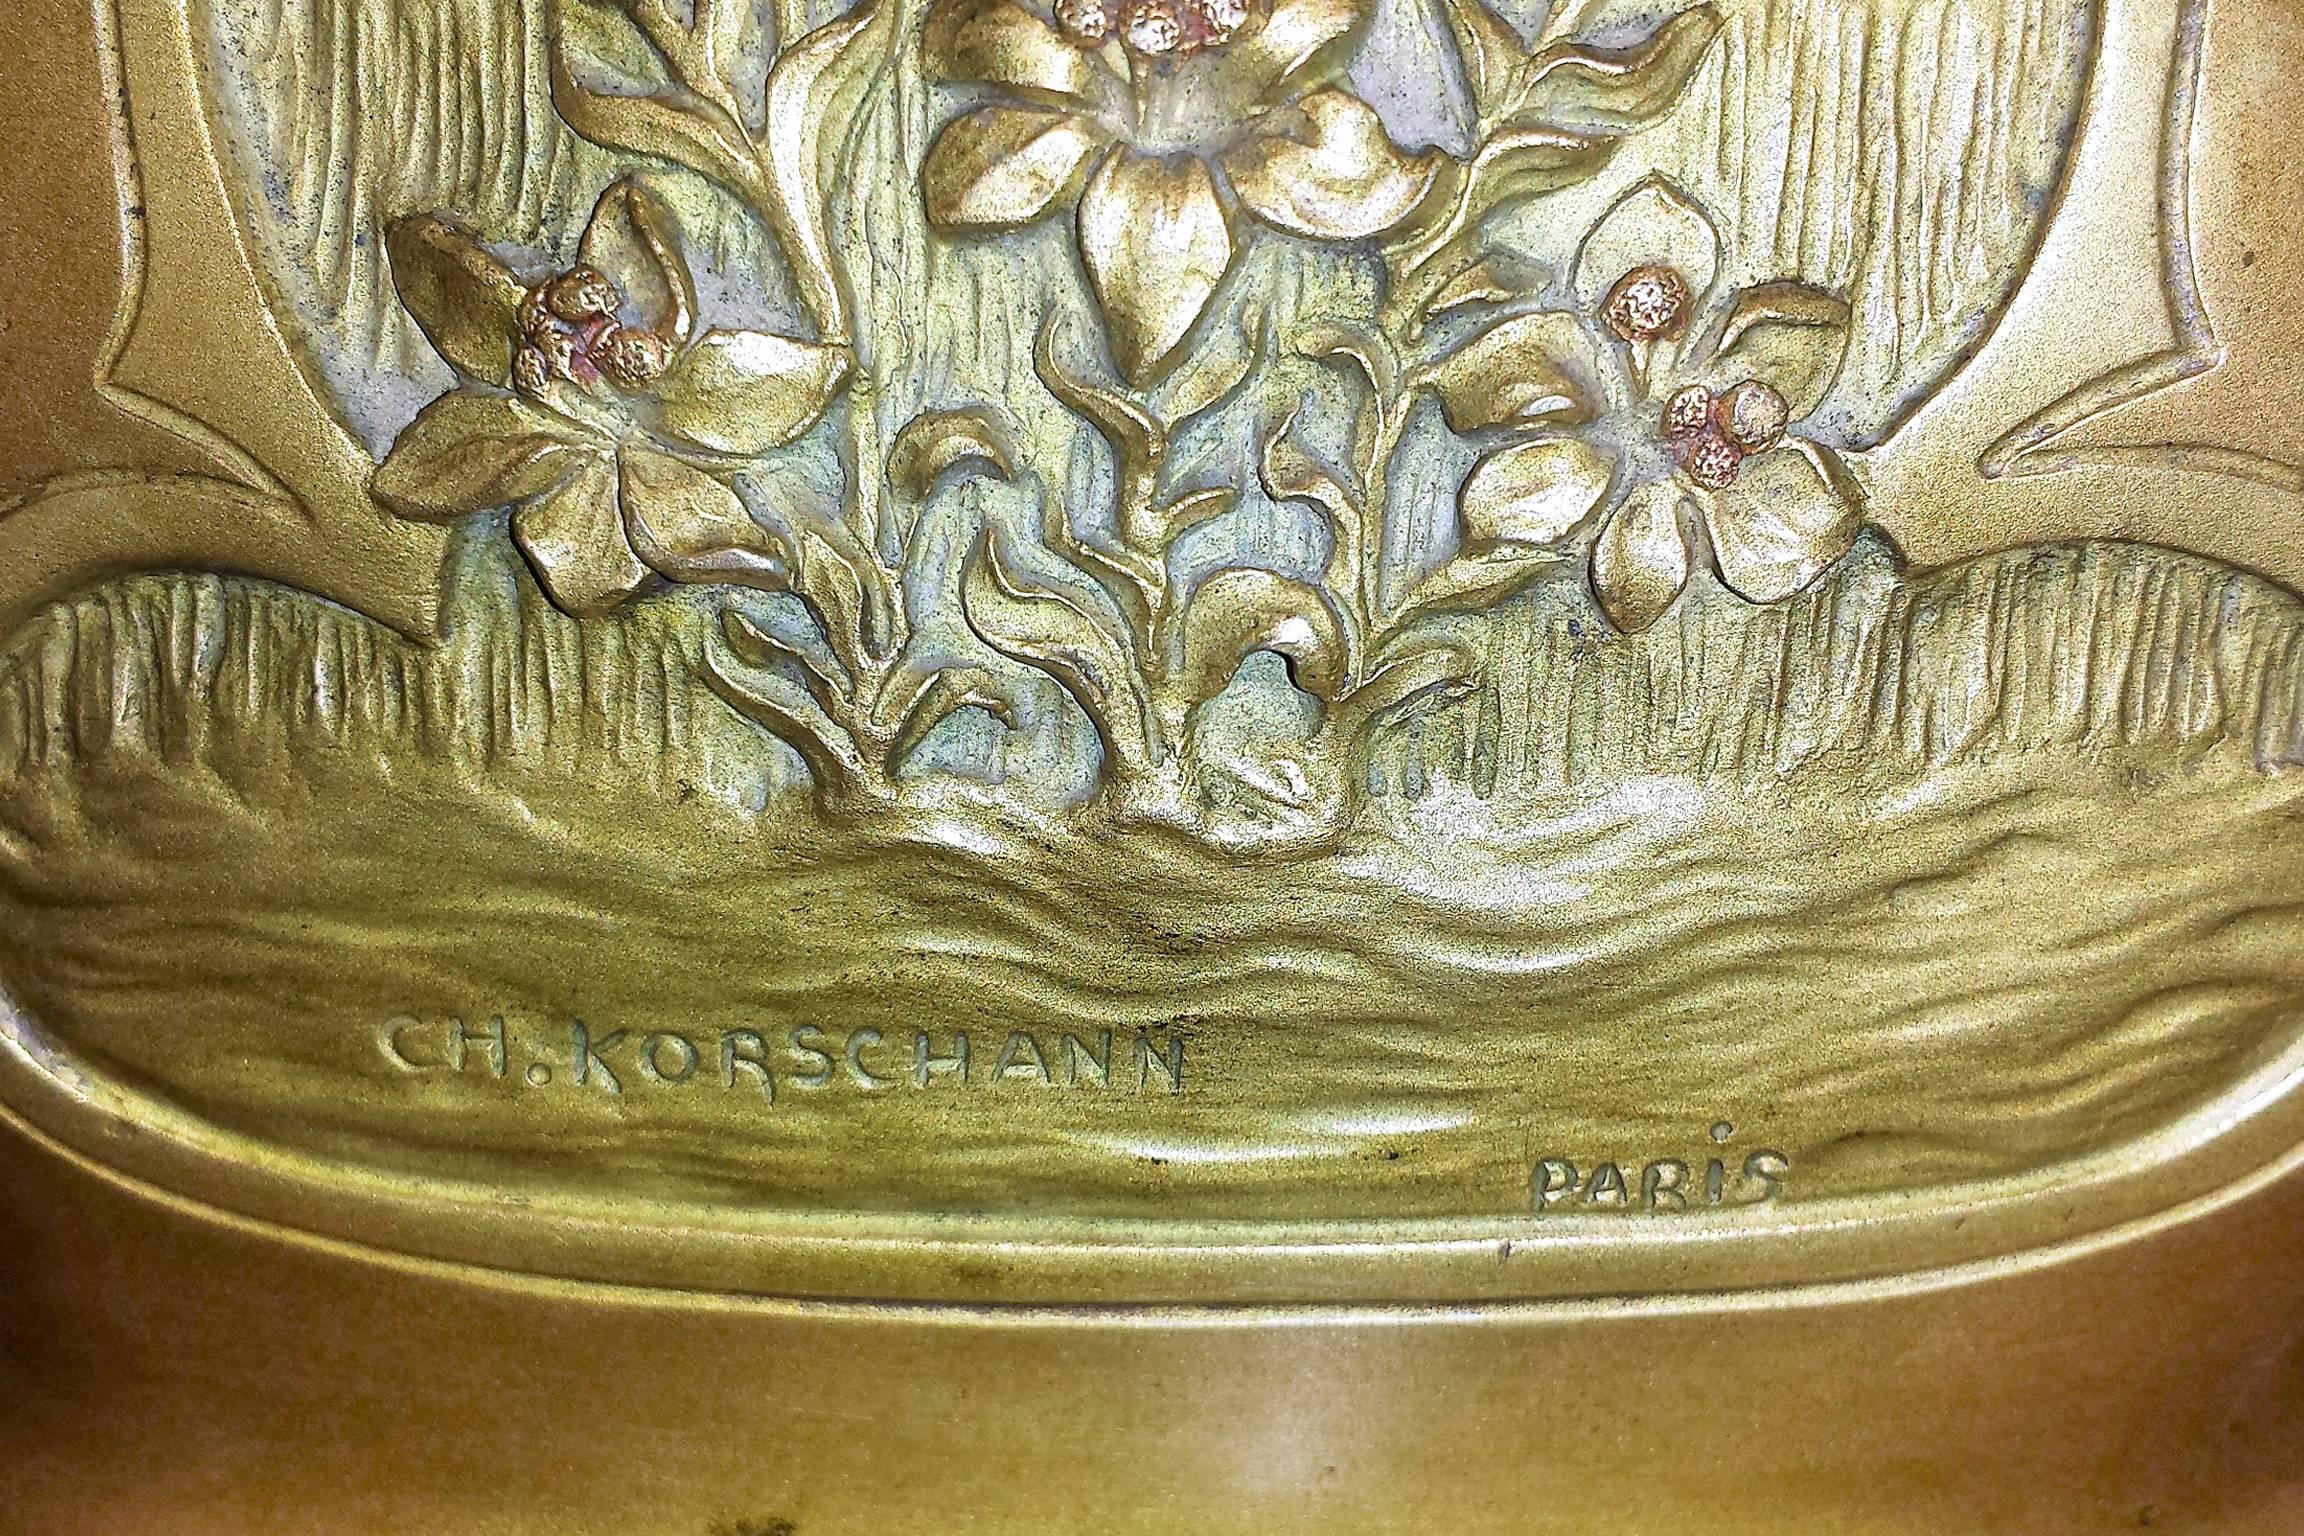 Original Art Nouveau Bronze Vase by Charles Korschann, circa 1900 For Sale 2